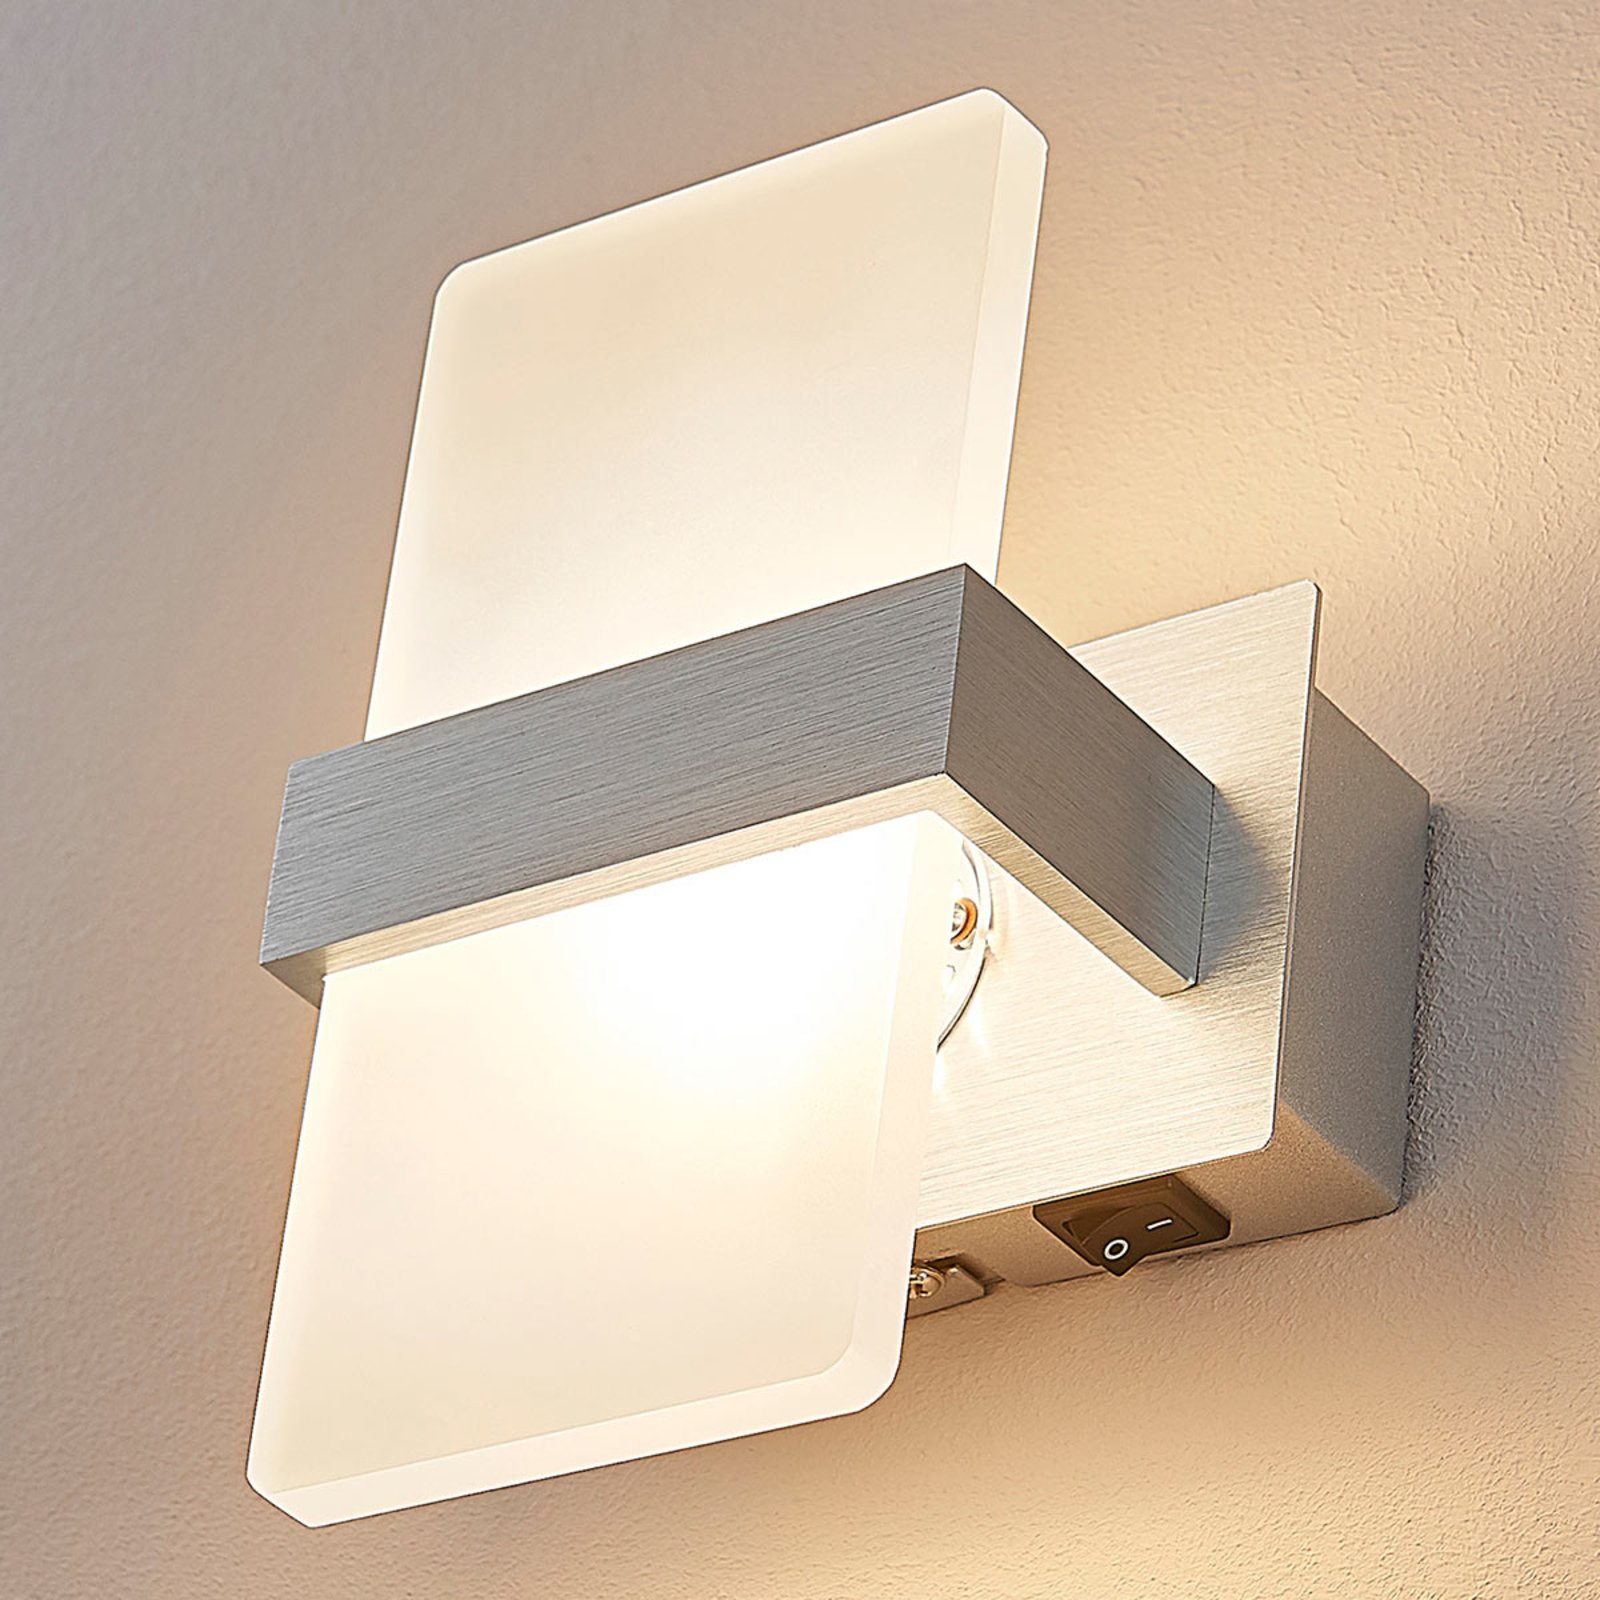 LED wall light Yorick with white plastic panel